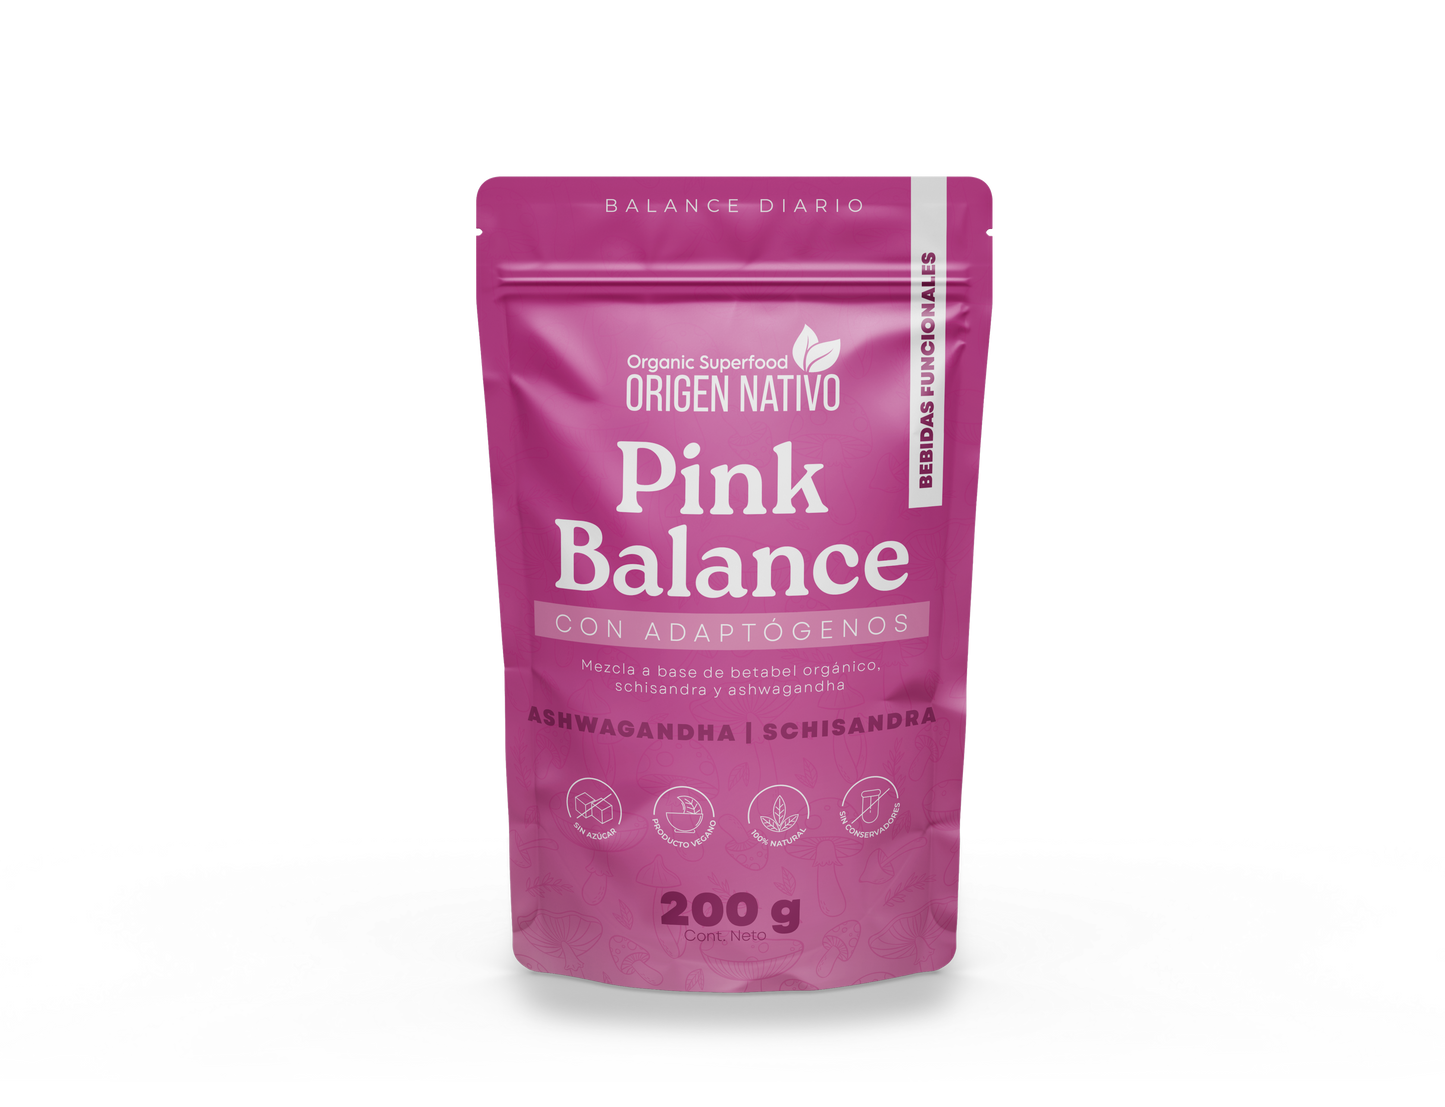 Pink Balance con adaptogenos